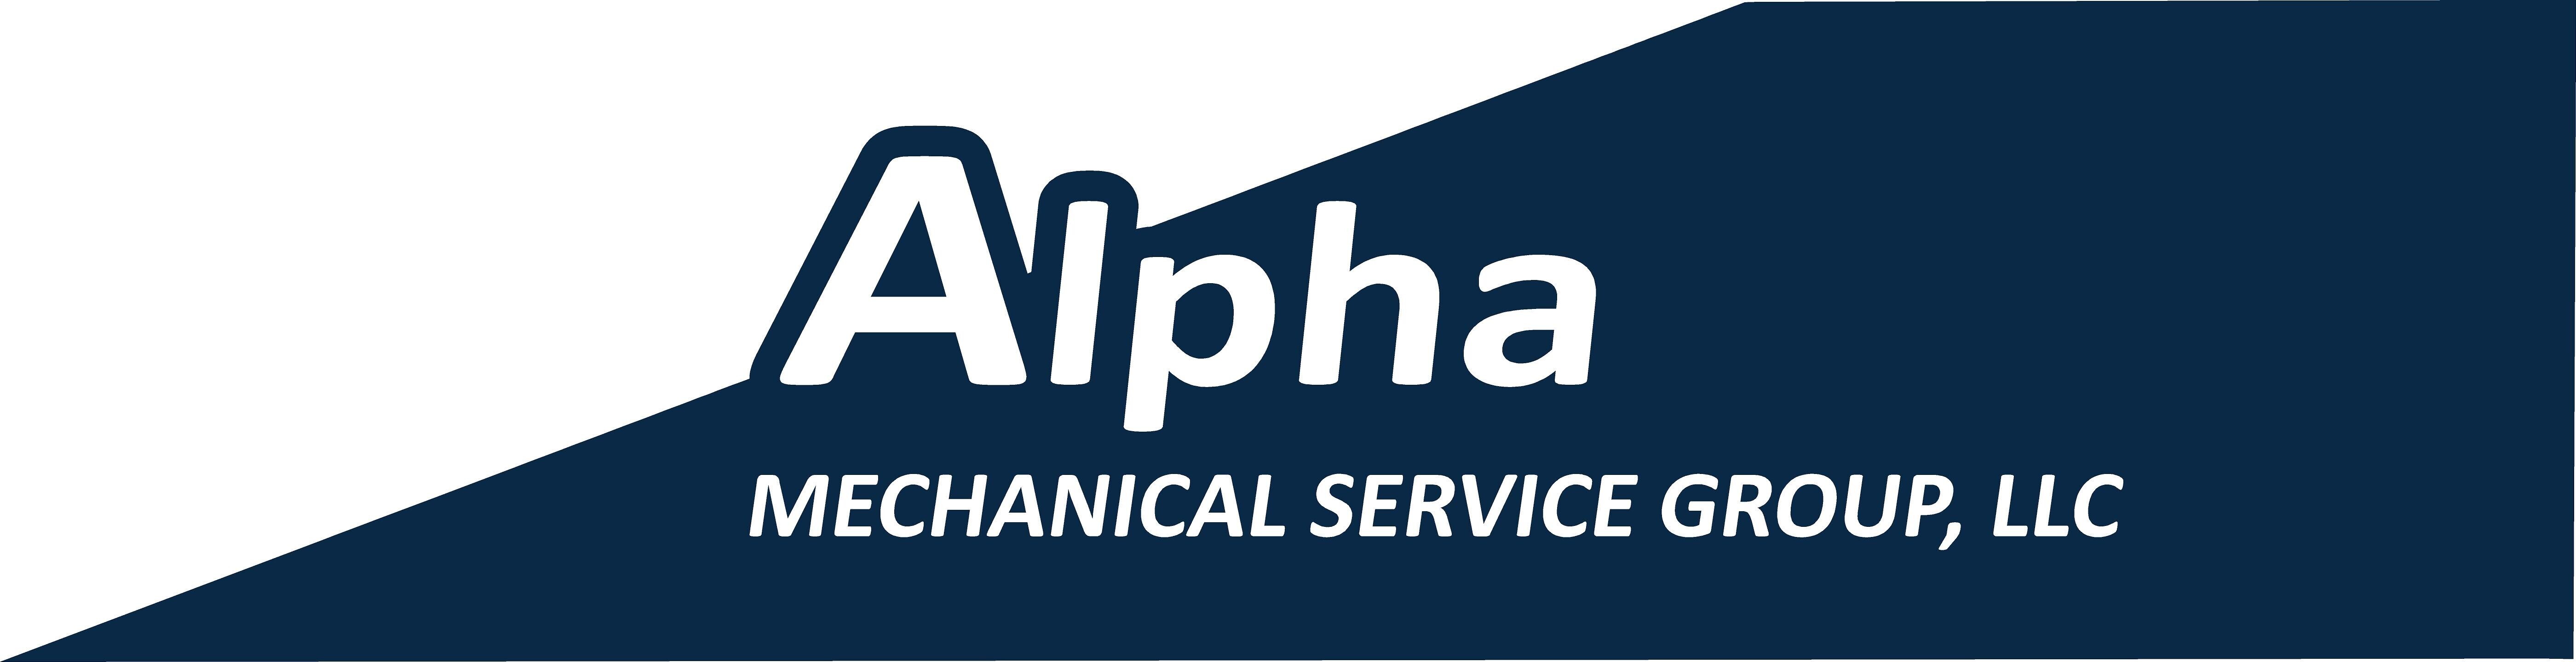 Alpha Mechanical Service Group